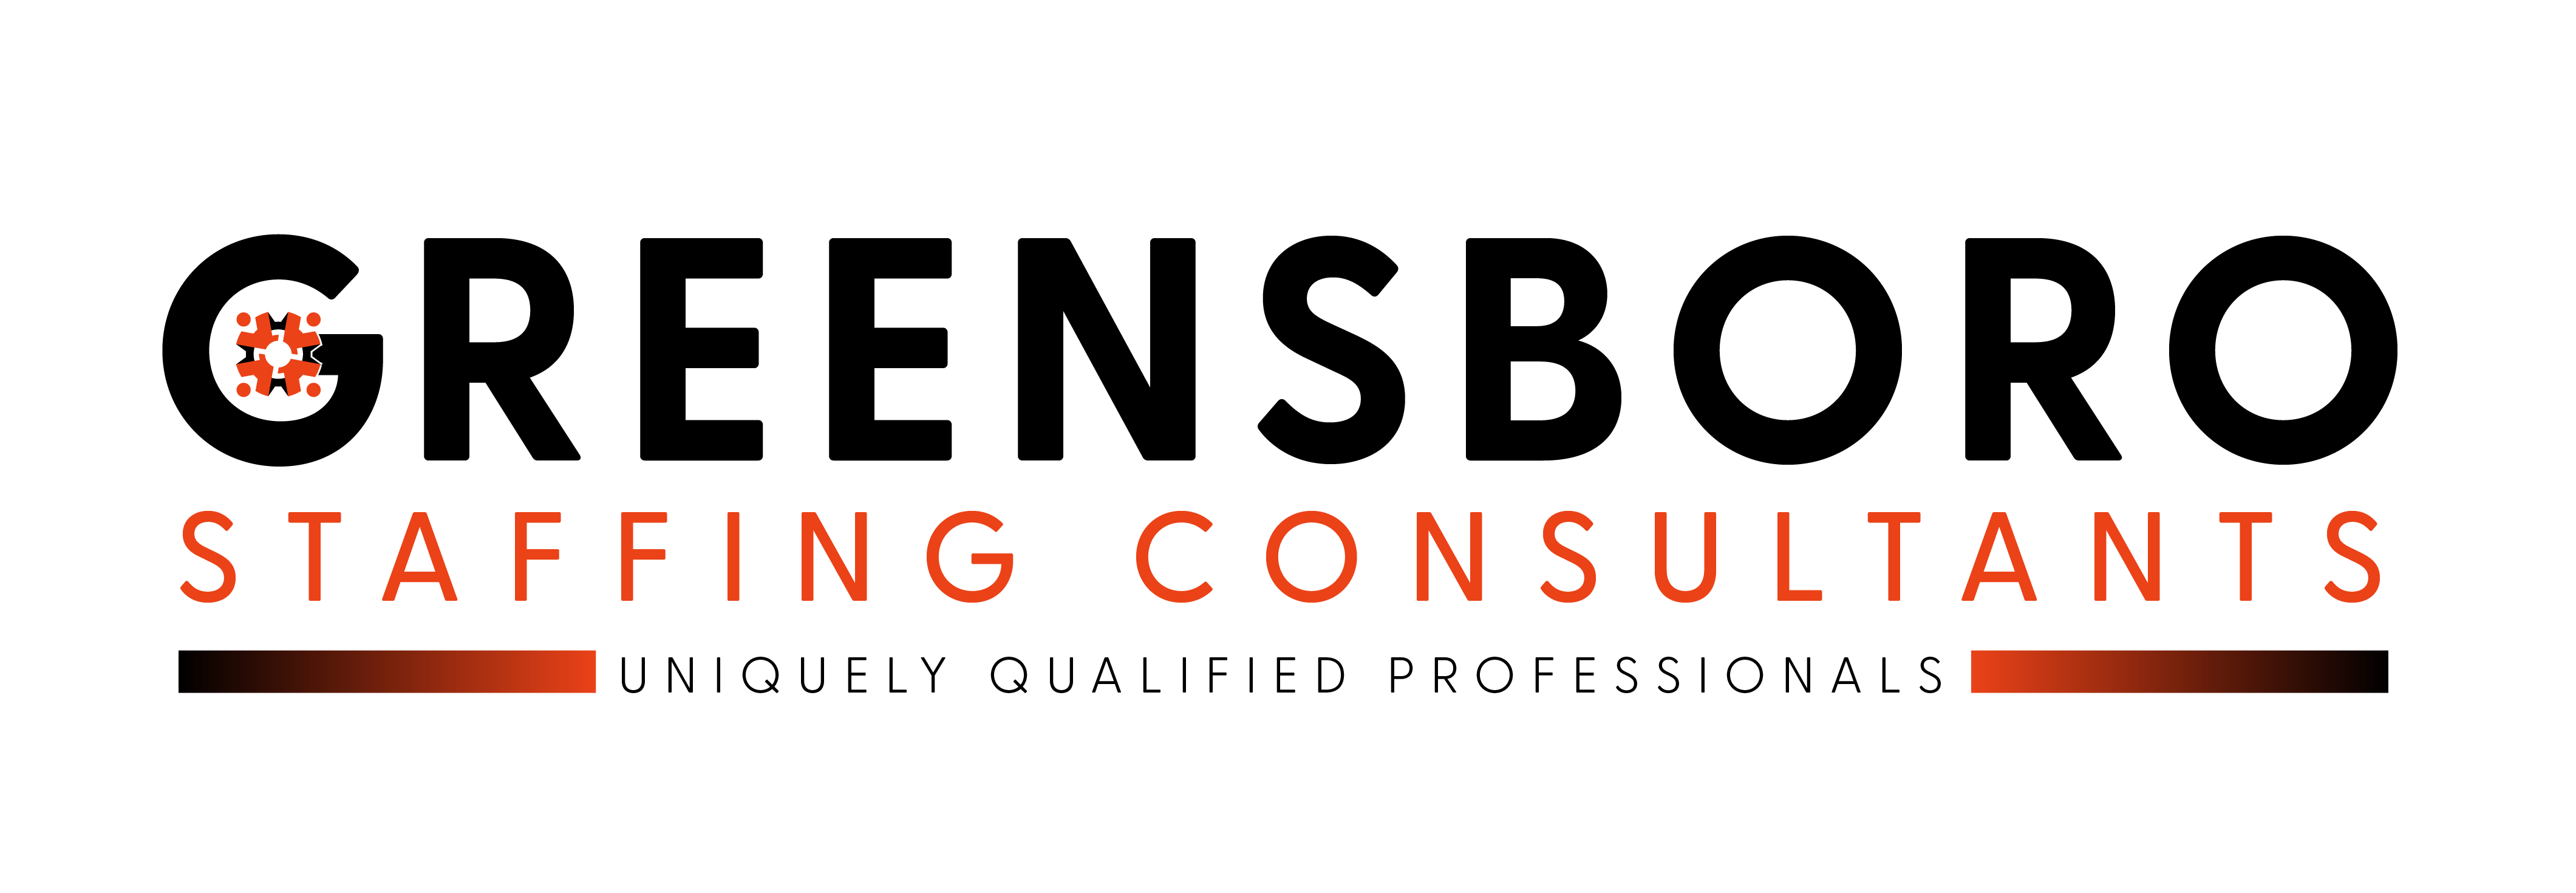 Greensboro Staffing Consultants Logo